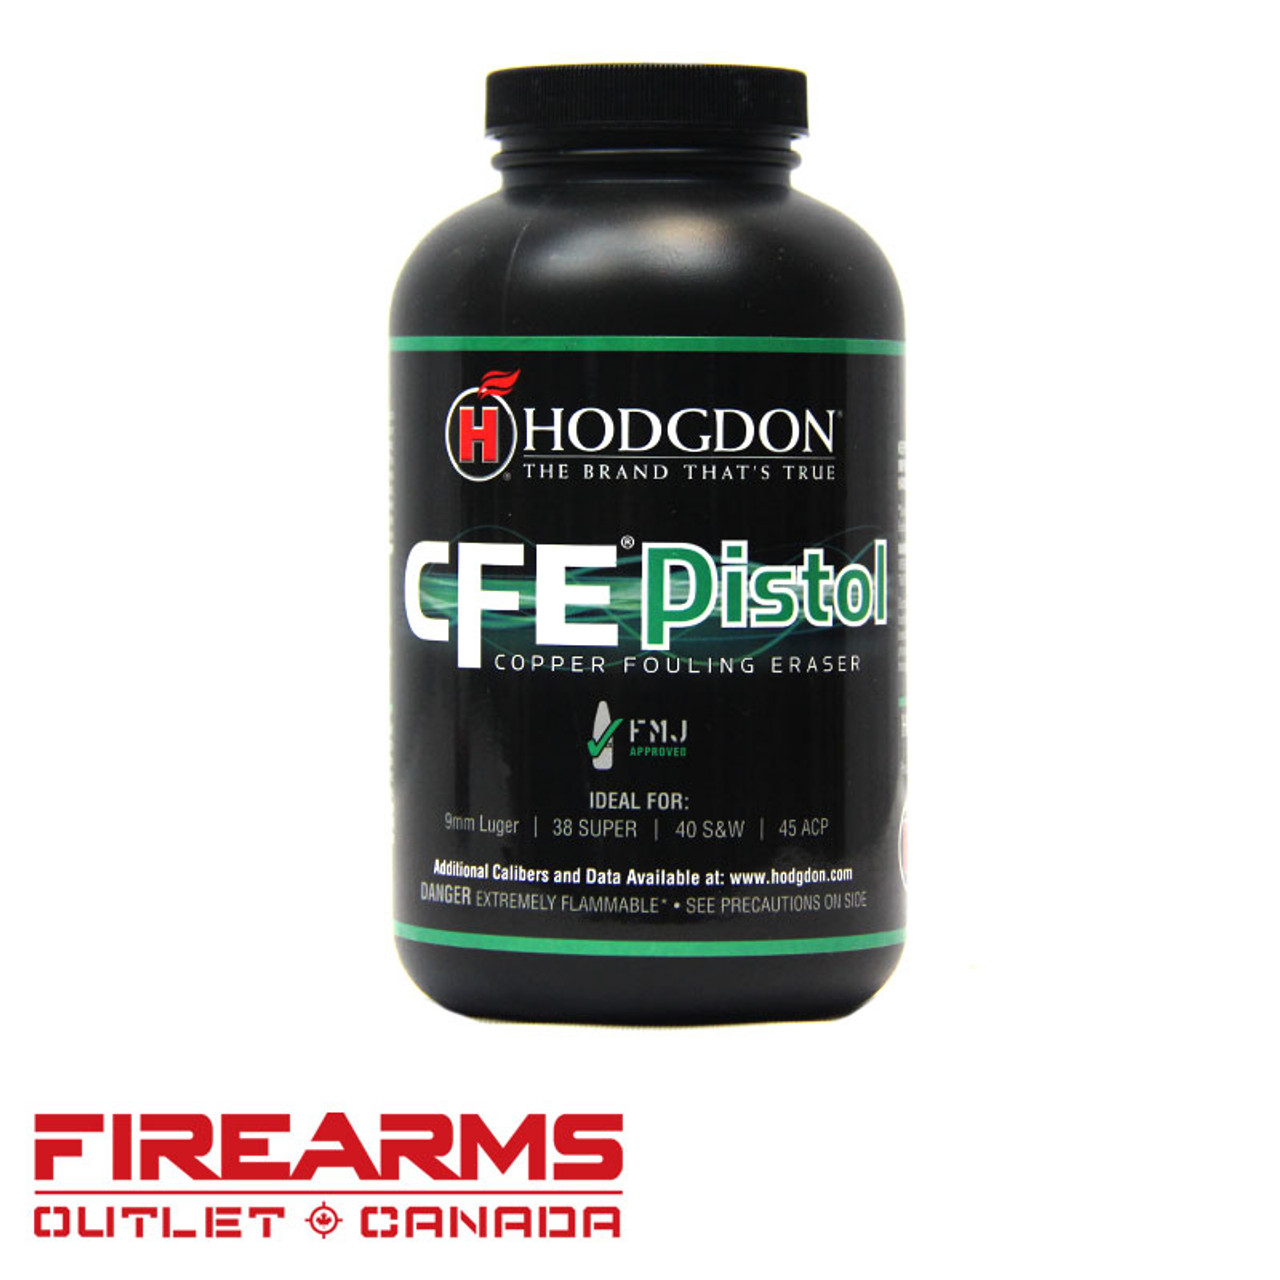 Hodgdon CFE Pistol Powder - 1 lb.